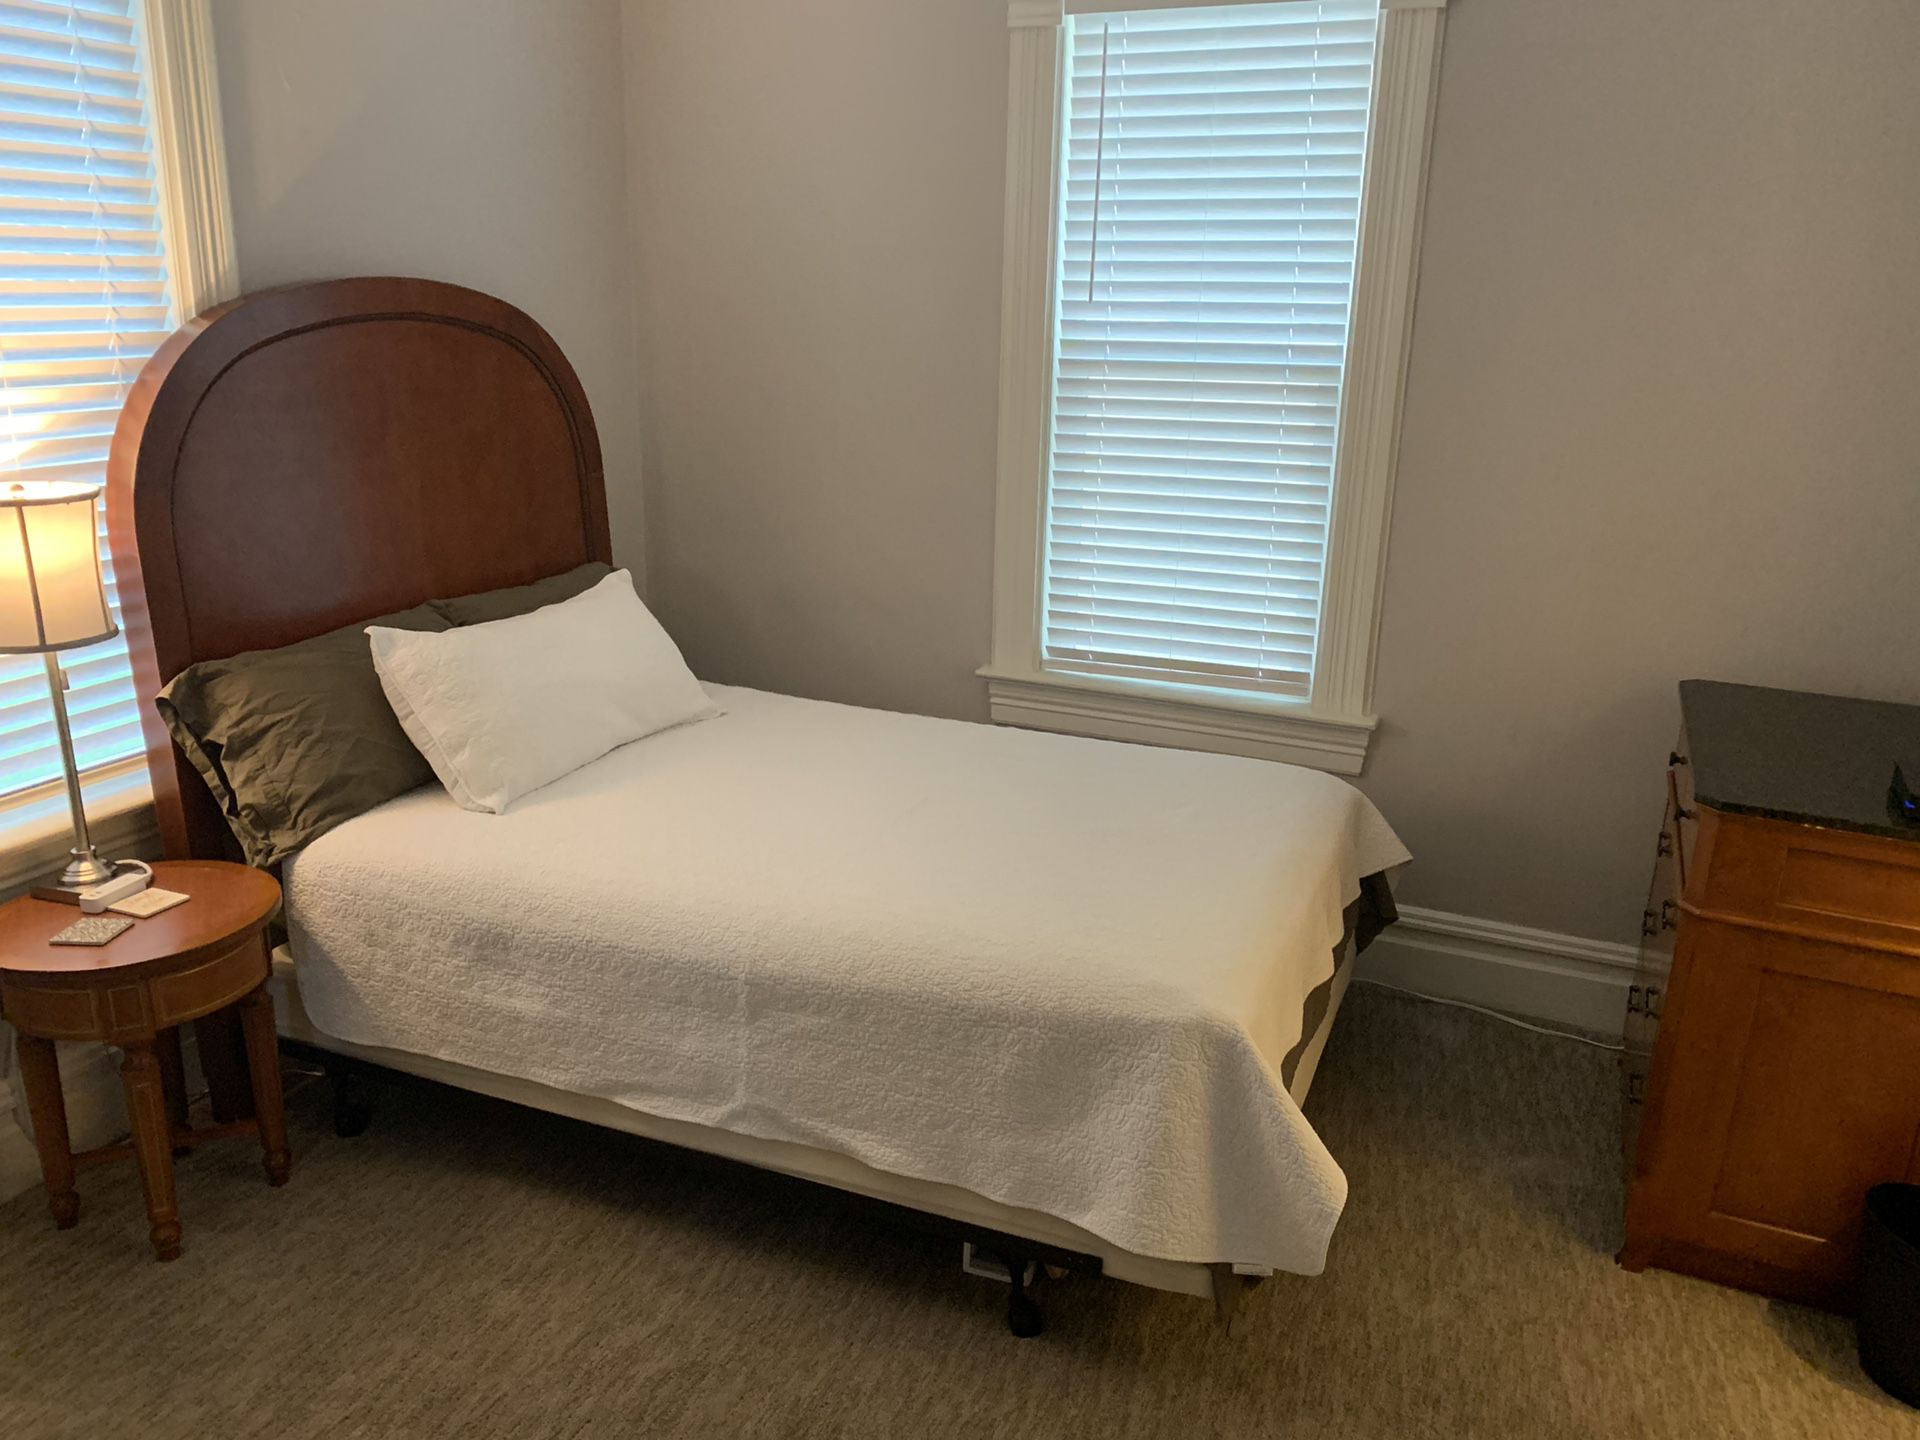 Full Size (extra long full sized mattress) Bedroom Set, $275 OBO